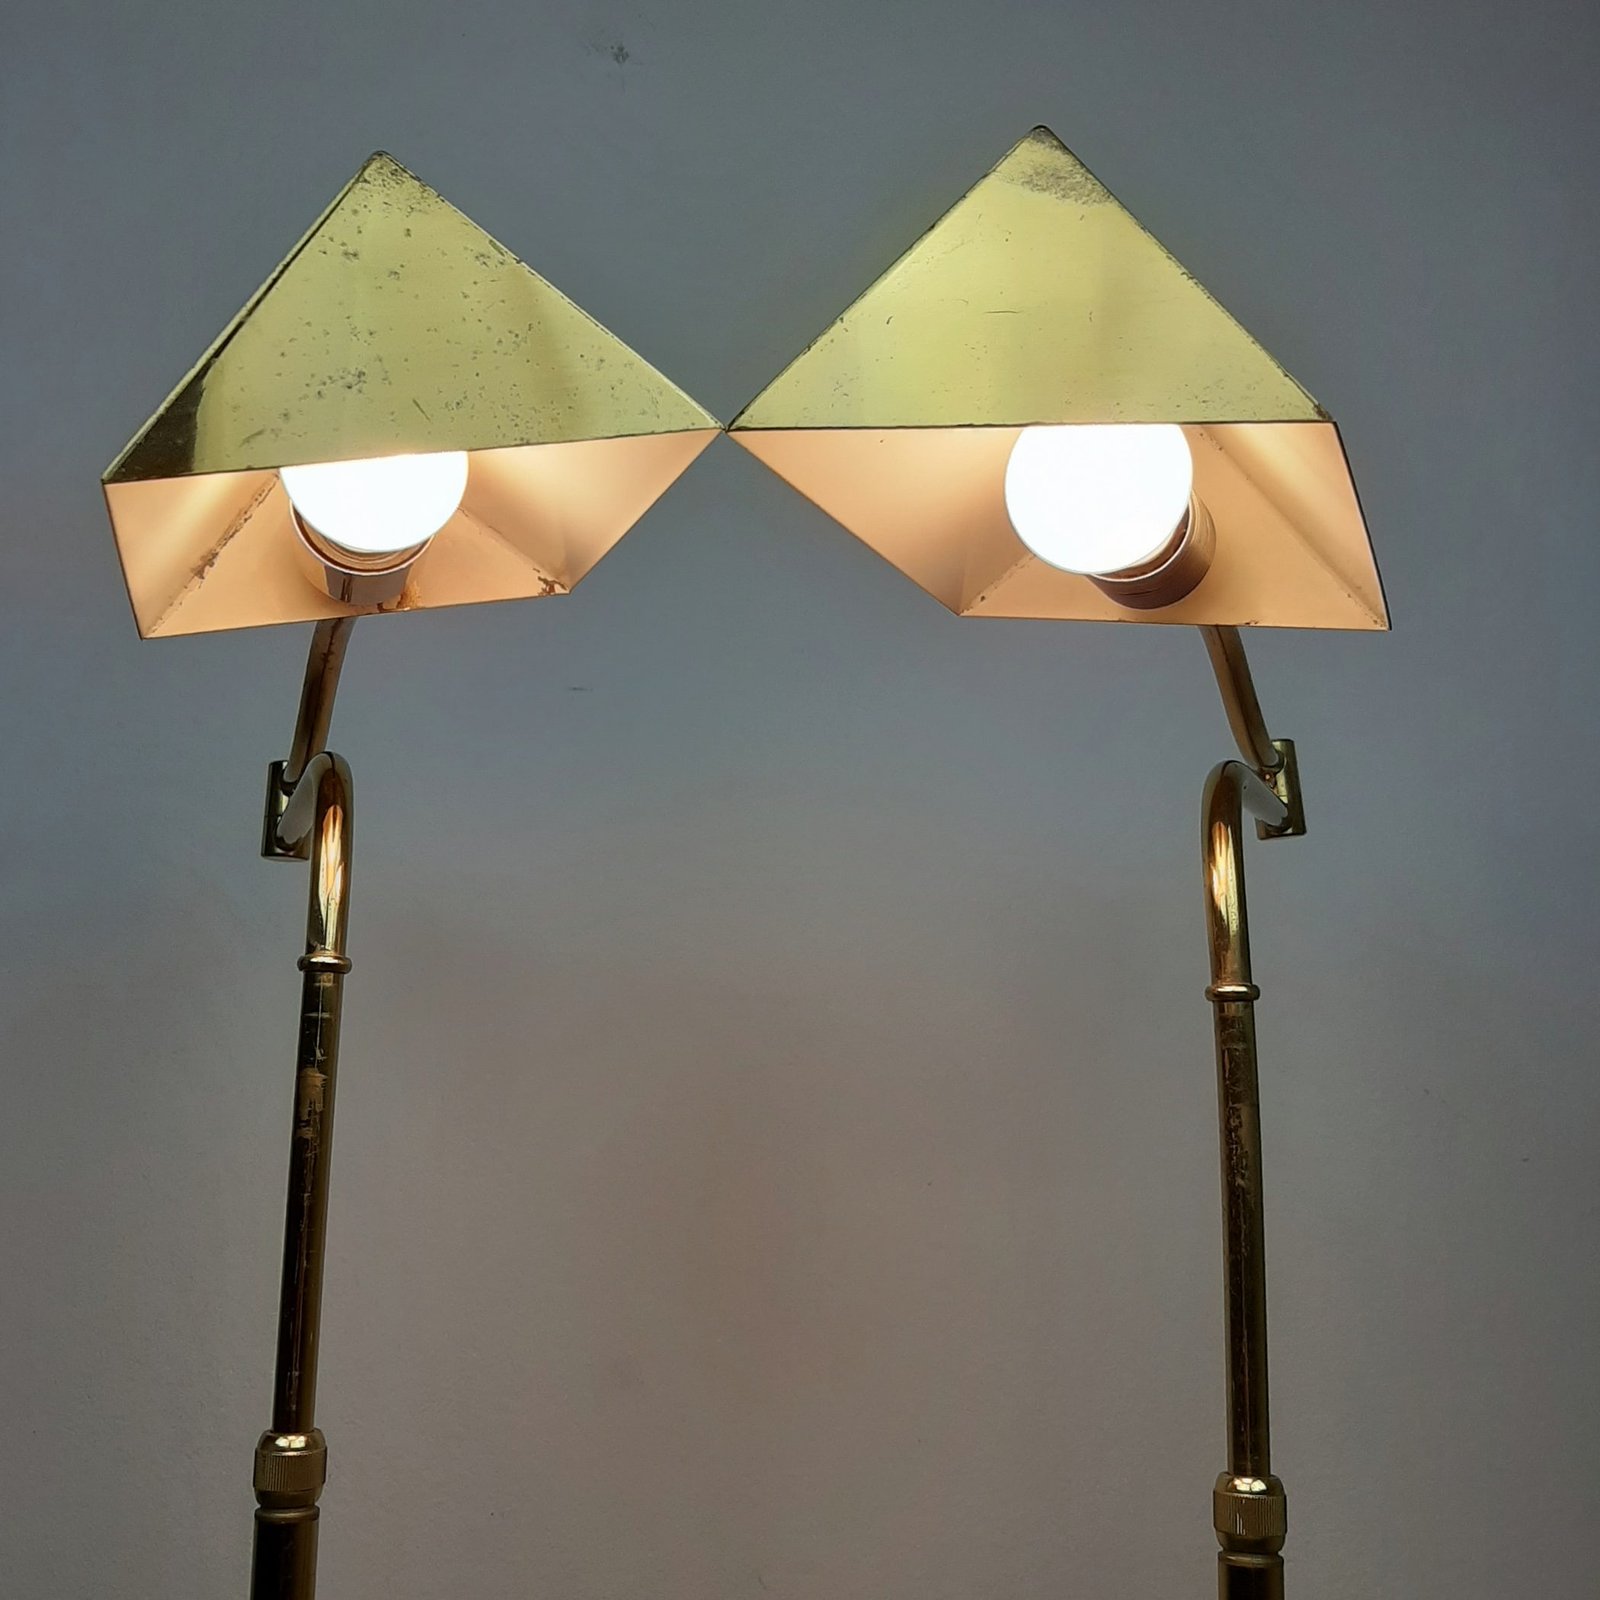 1 of 2 Mid-century brass floor lamp Germany 1970s Retro Modern Adjustable Brass Floor Lamp Style by Florian Schulz